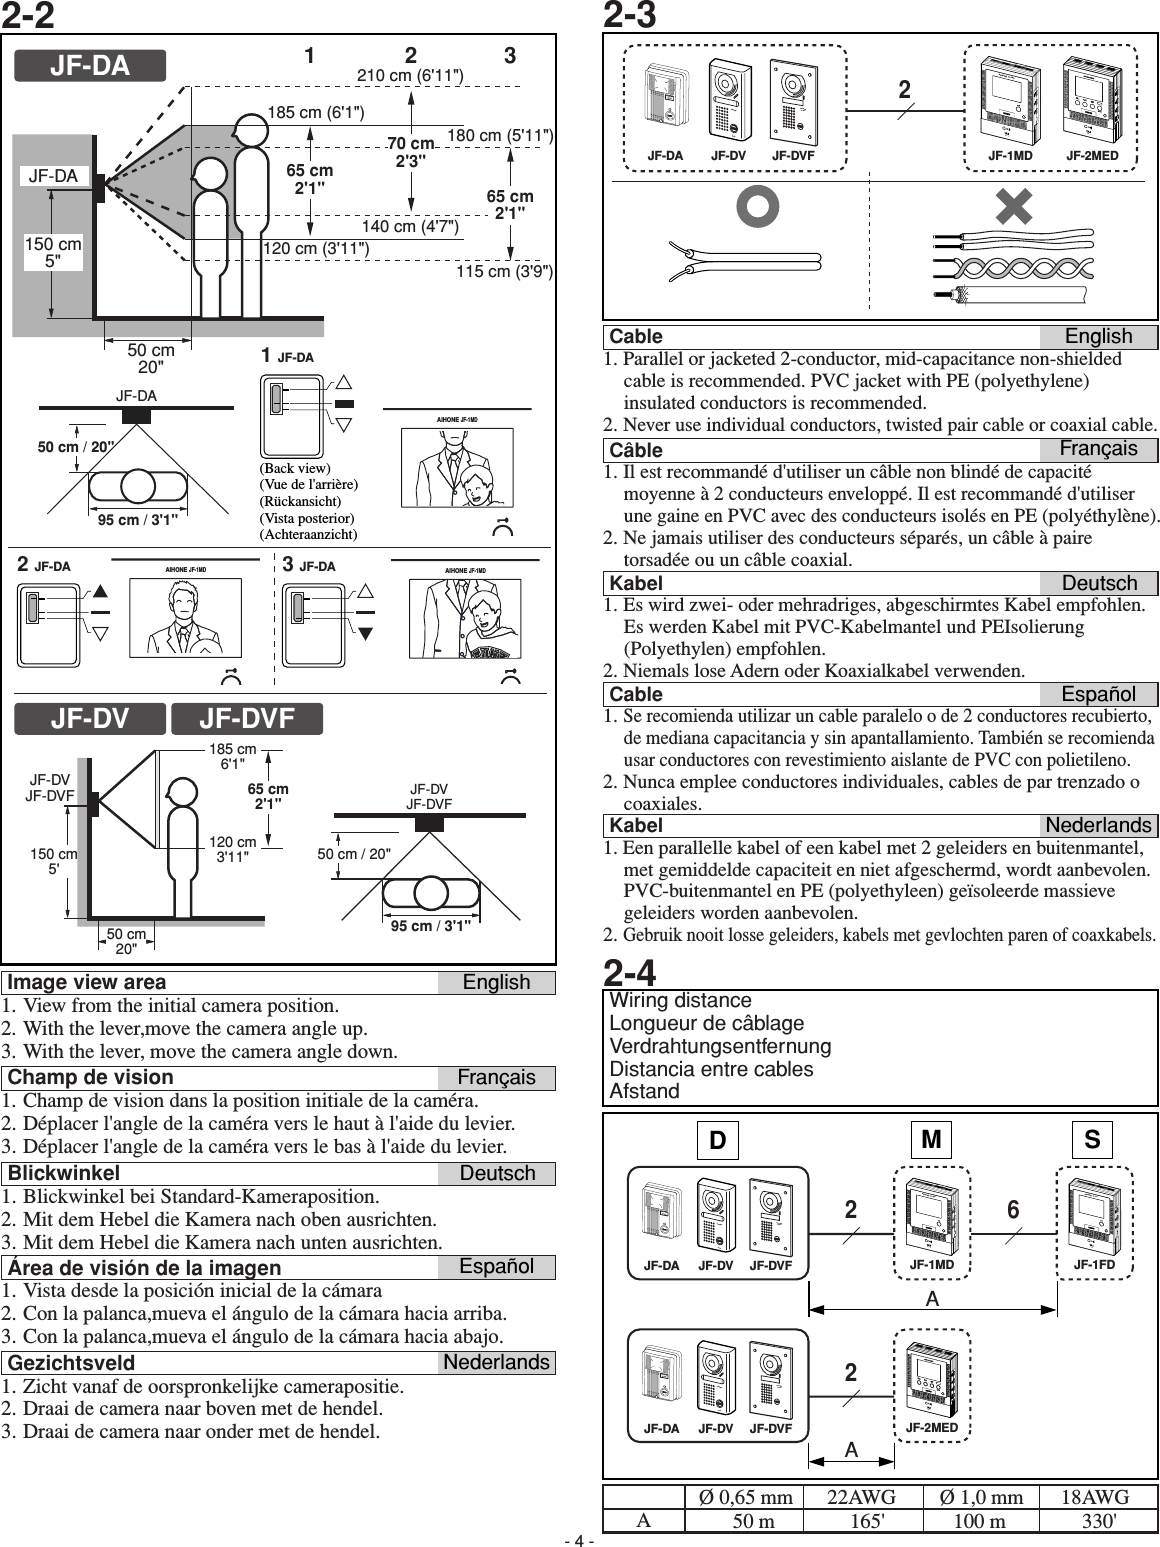 Page 4 of 8 - Aiphone JF-DA_M JF-DA, JF-DV, JF-DVF Instructions JF-DA DV DVF Instr